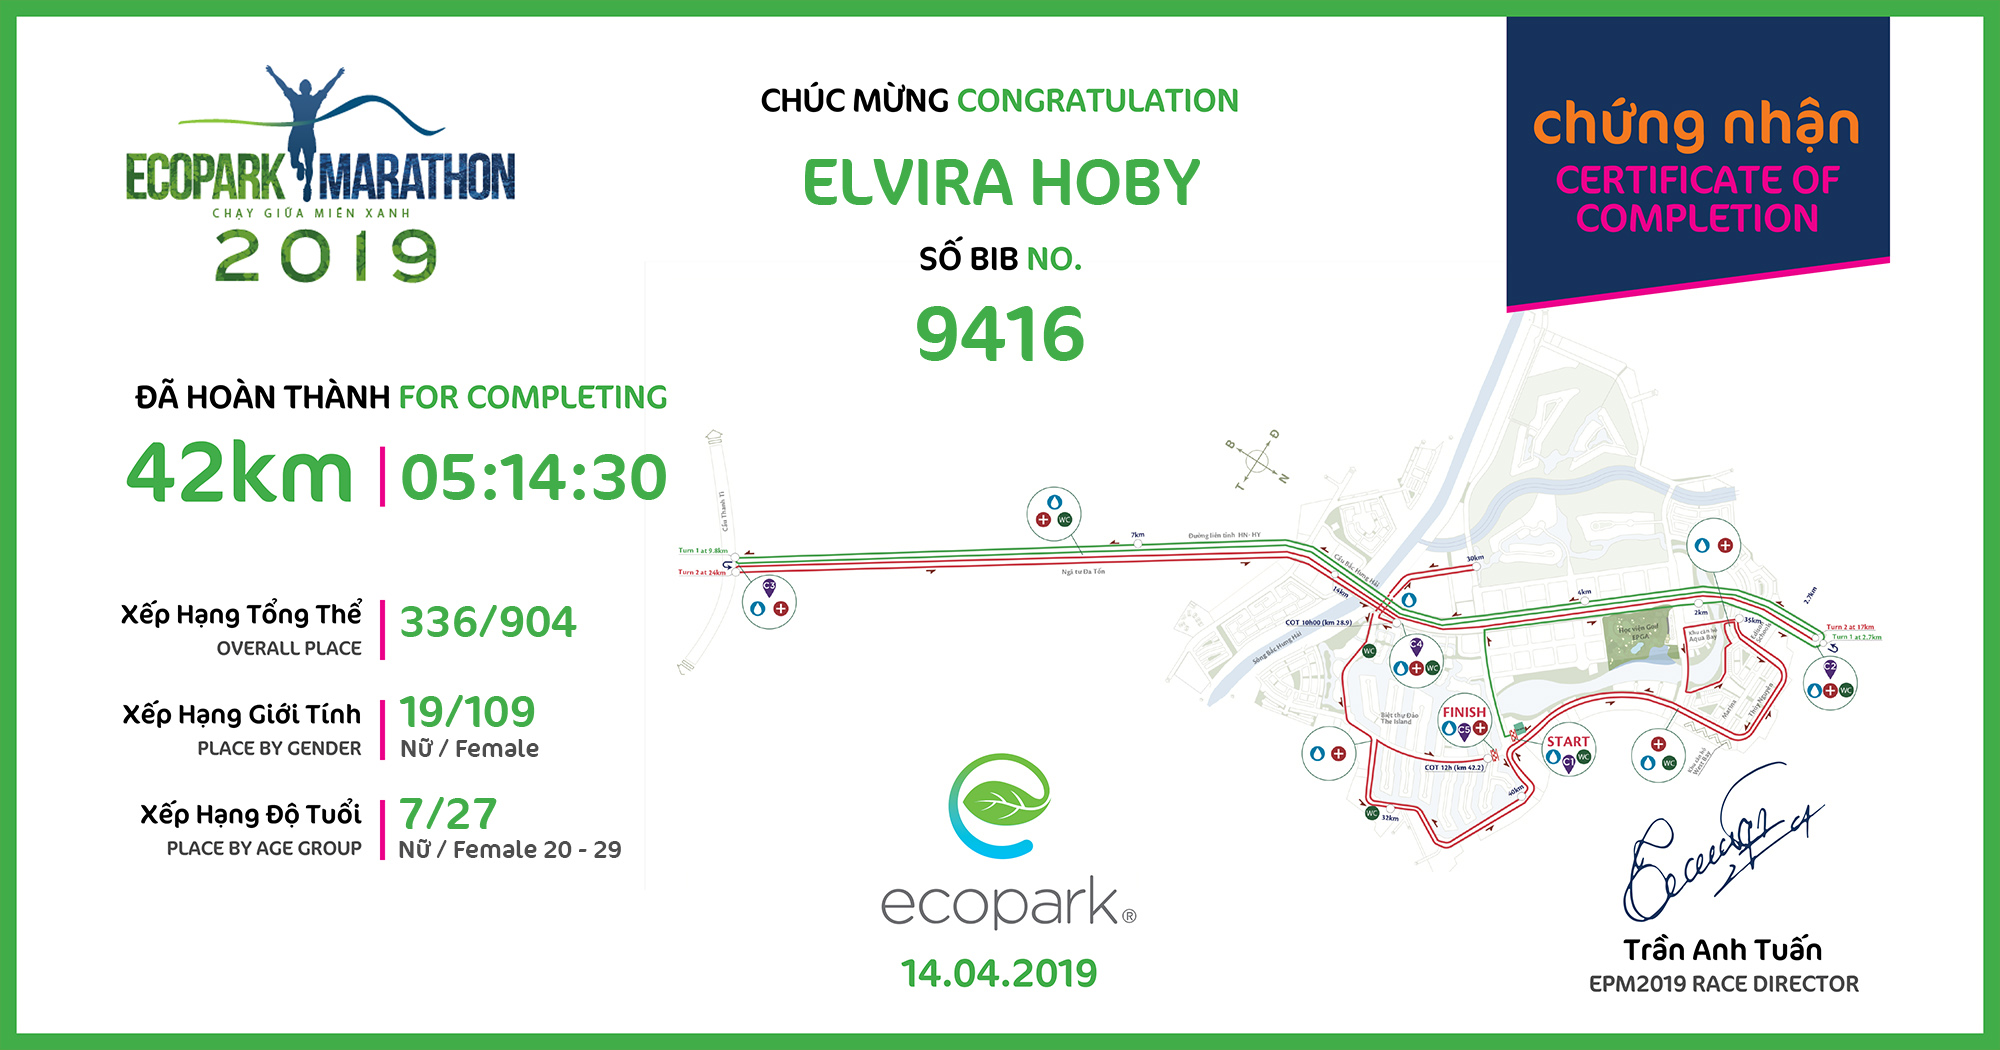 9416 - Elvira Hoby